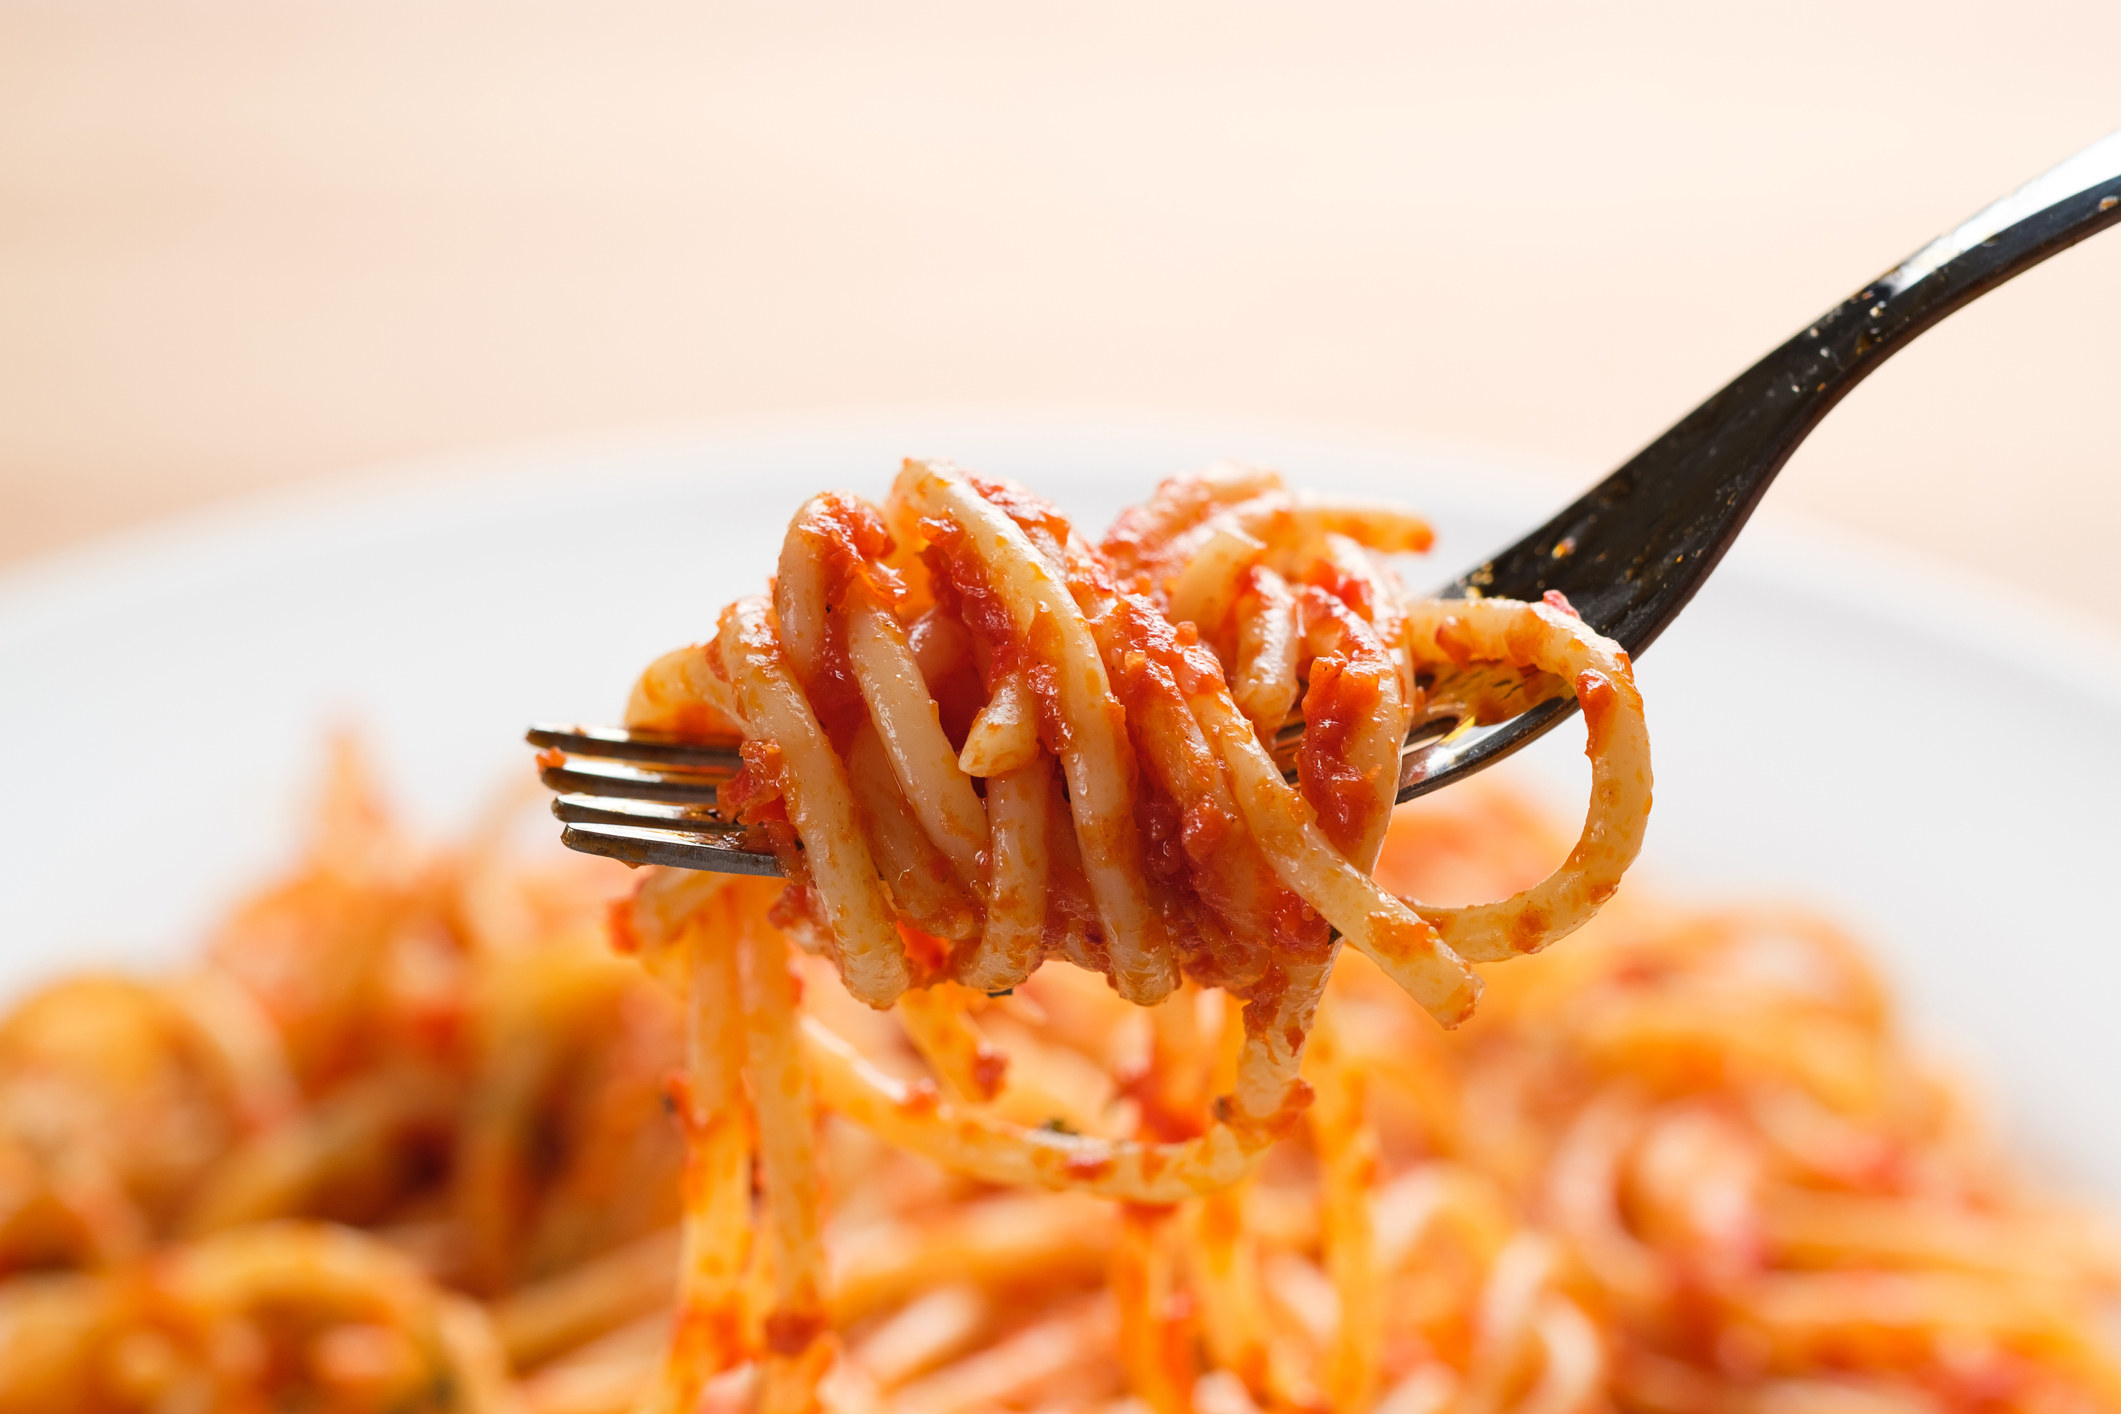 Spaghetti wrapped around a fork.